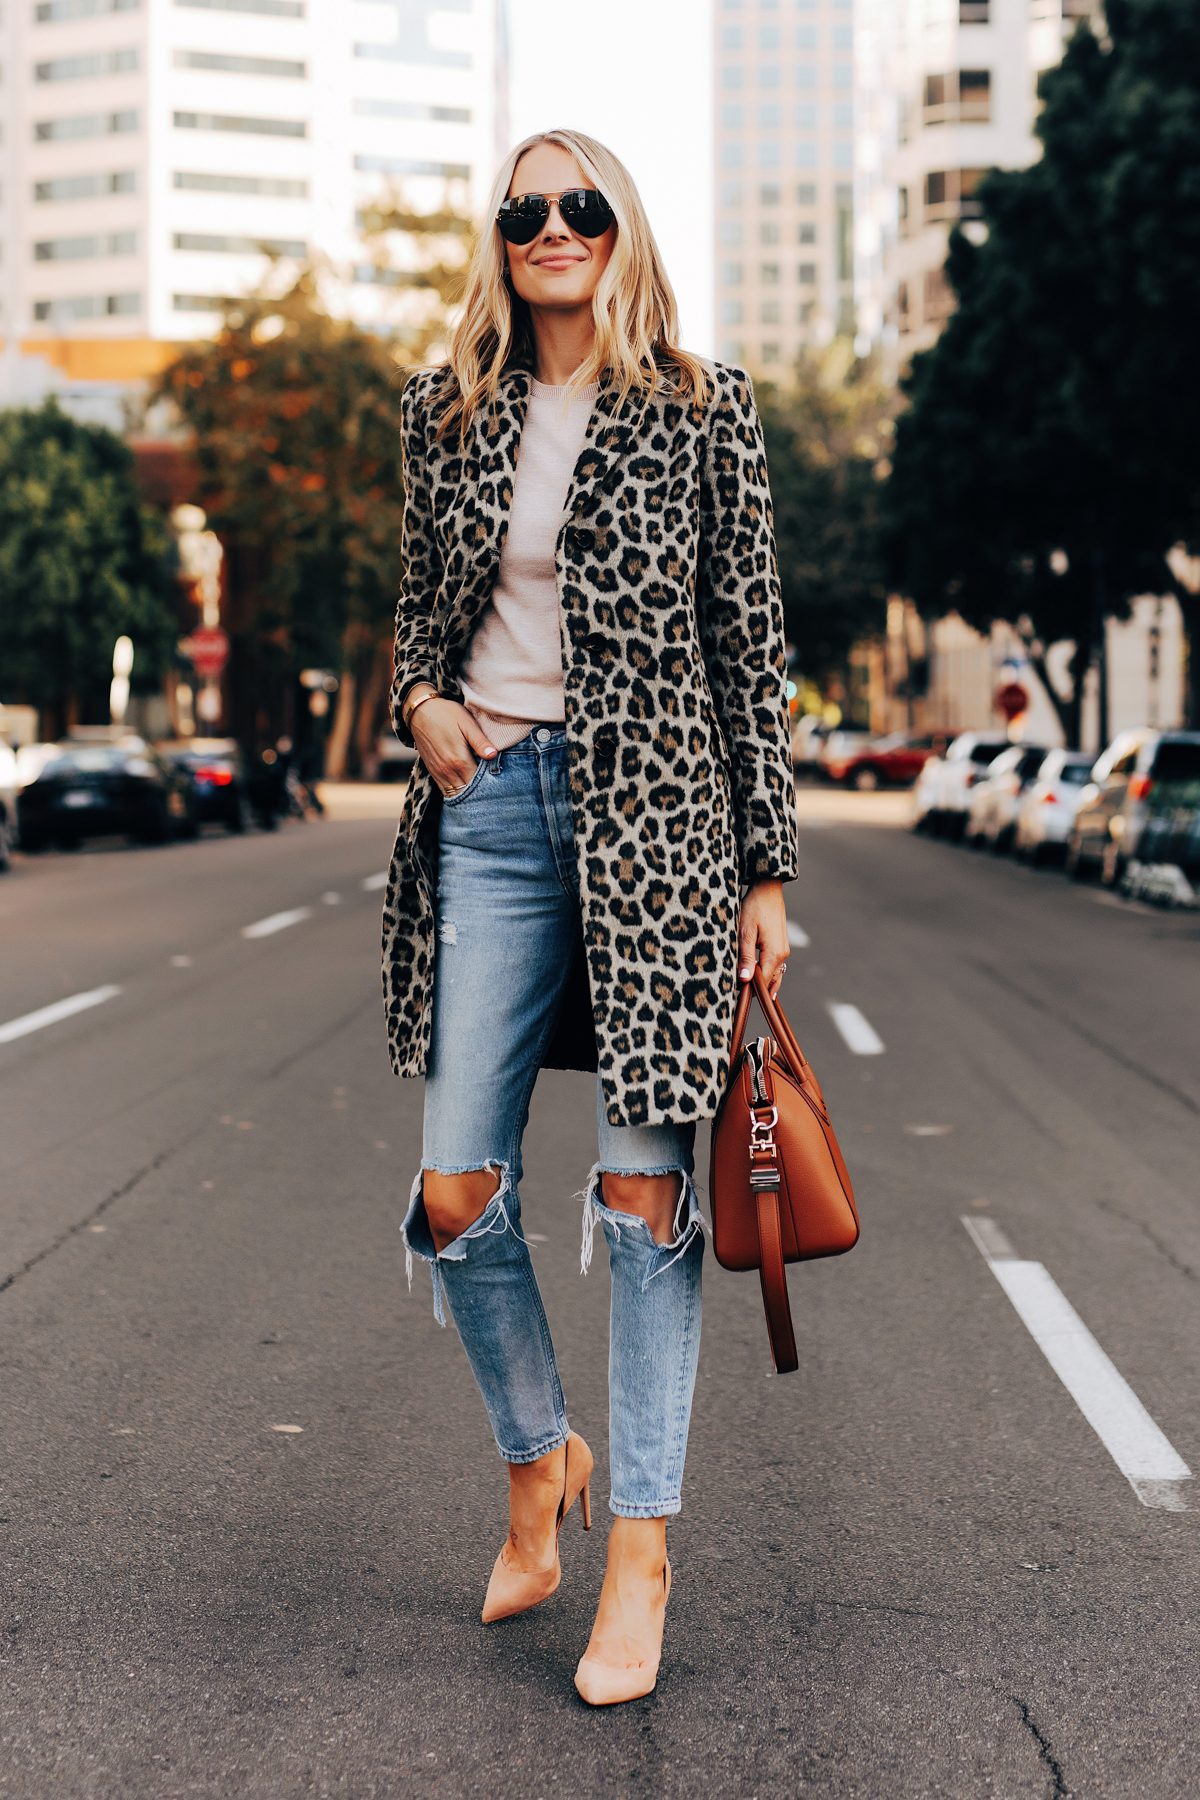 Leopard Print Coats. 1 60+ Fashionable '90s Ladies Outfit Ideas That Come Back - 8